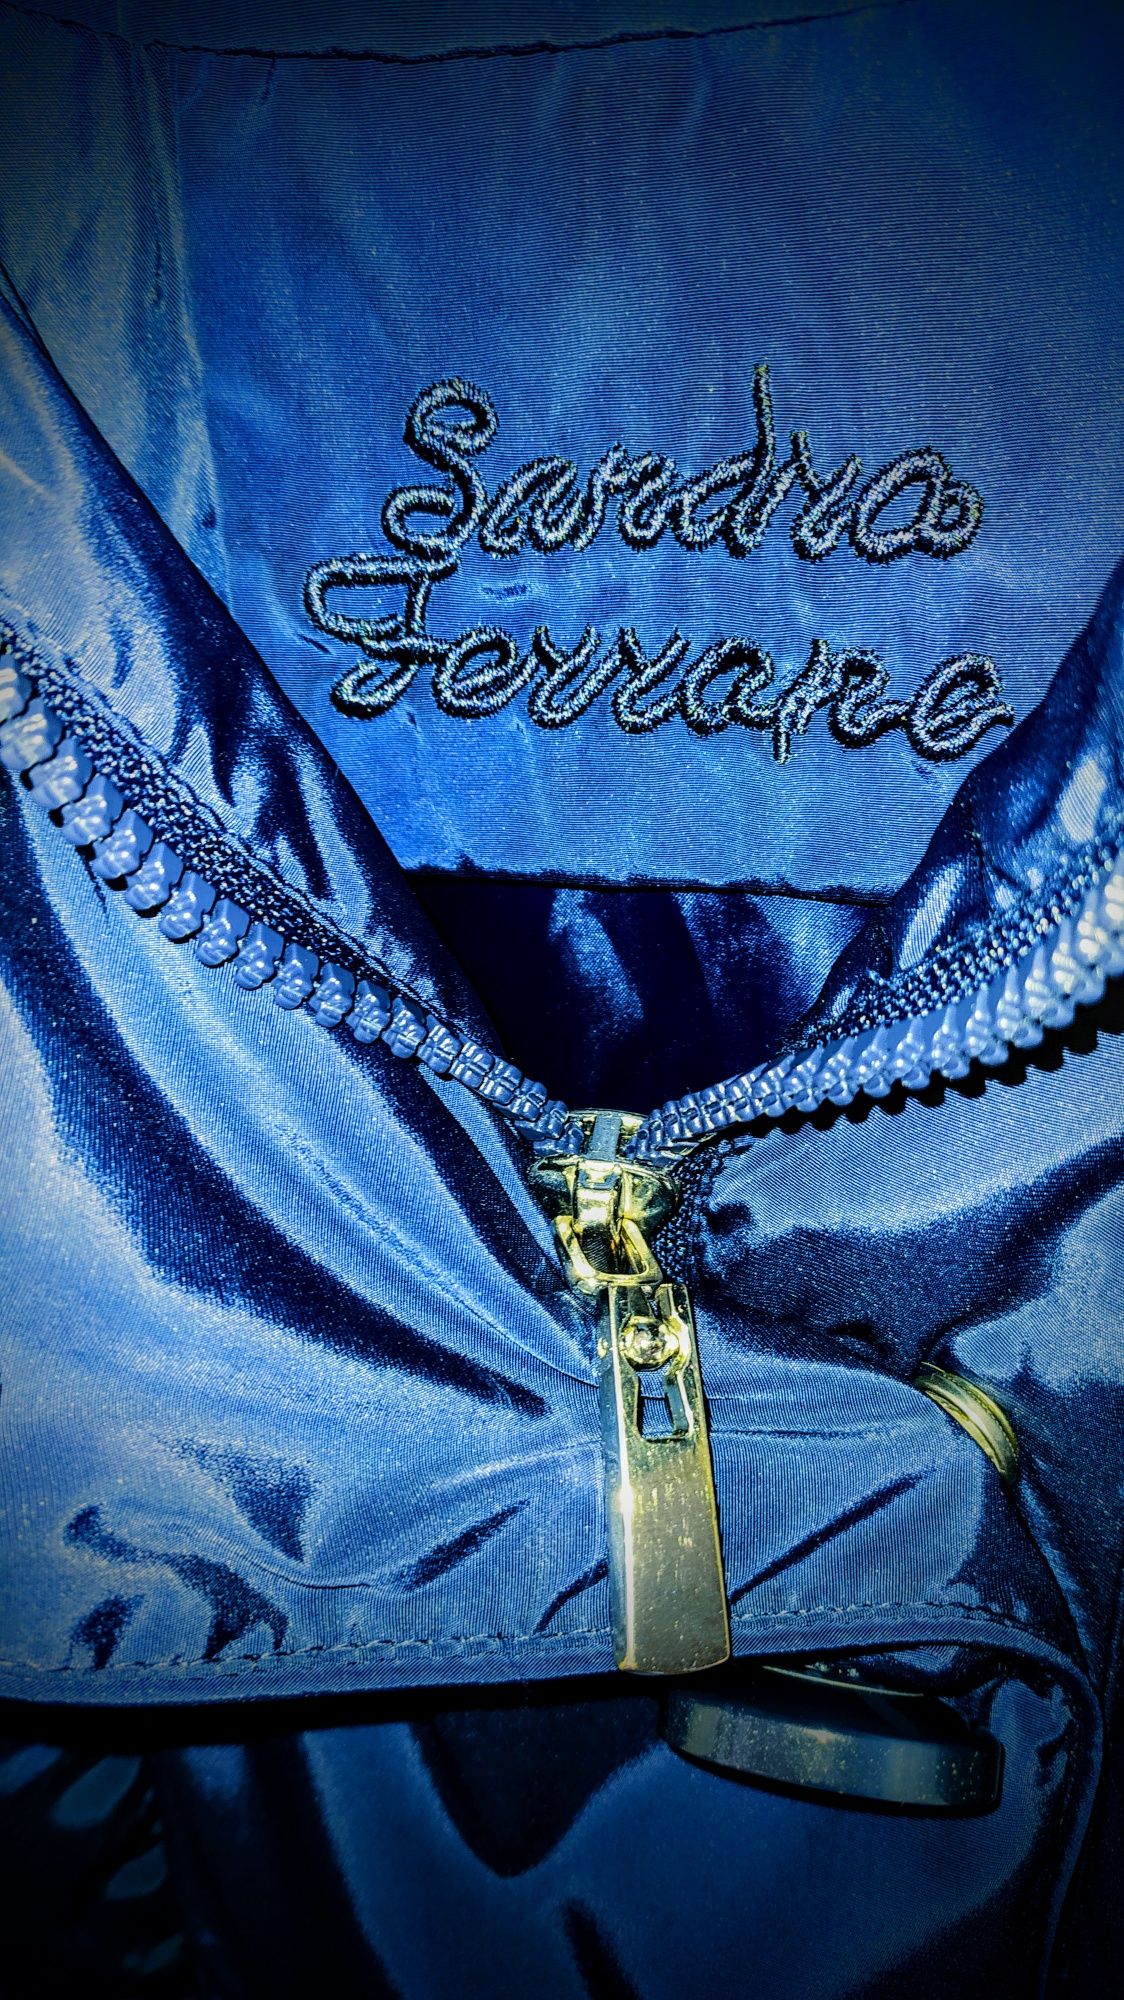 Пуховик SANDRO Ferrone зимний тёплый женский куртка брендовый италия